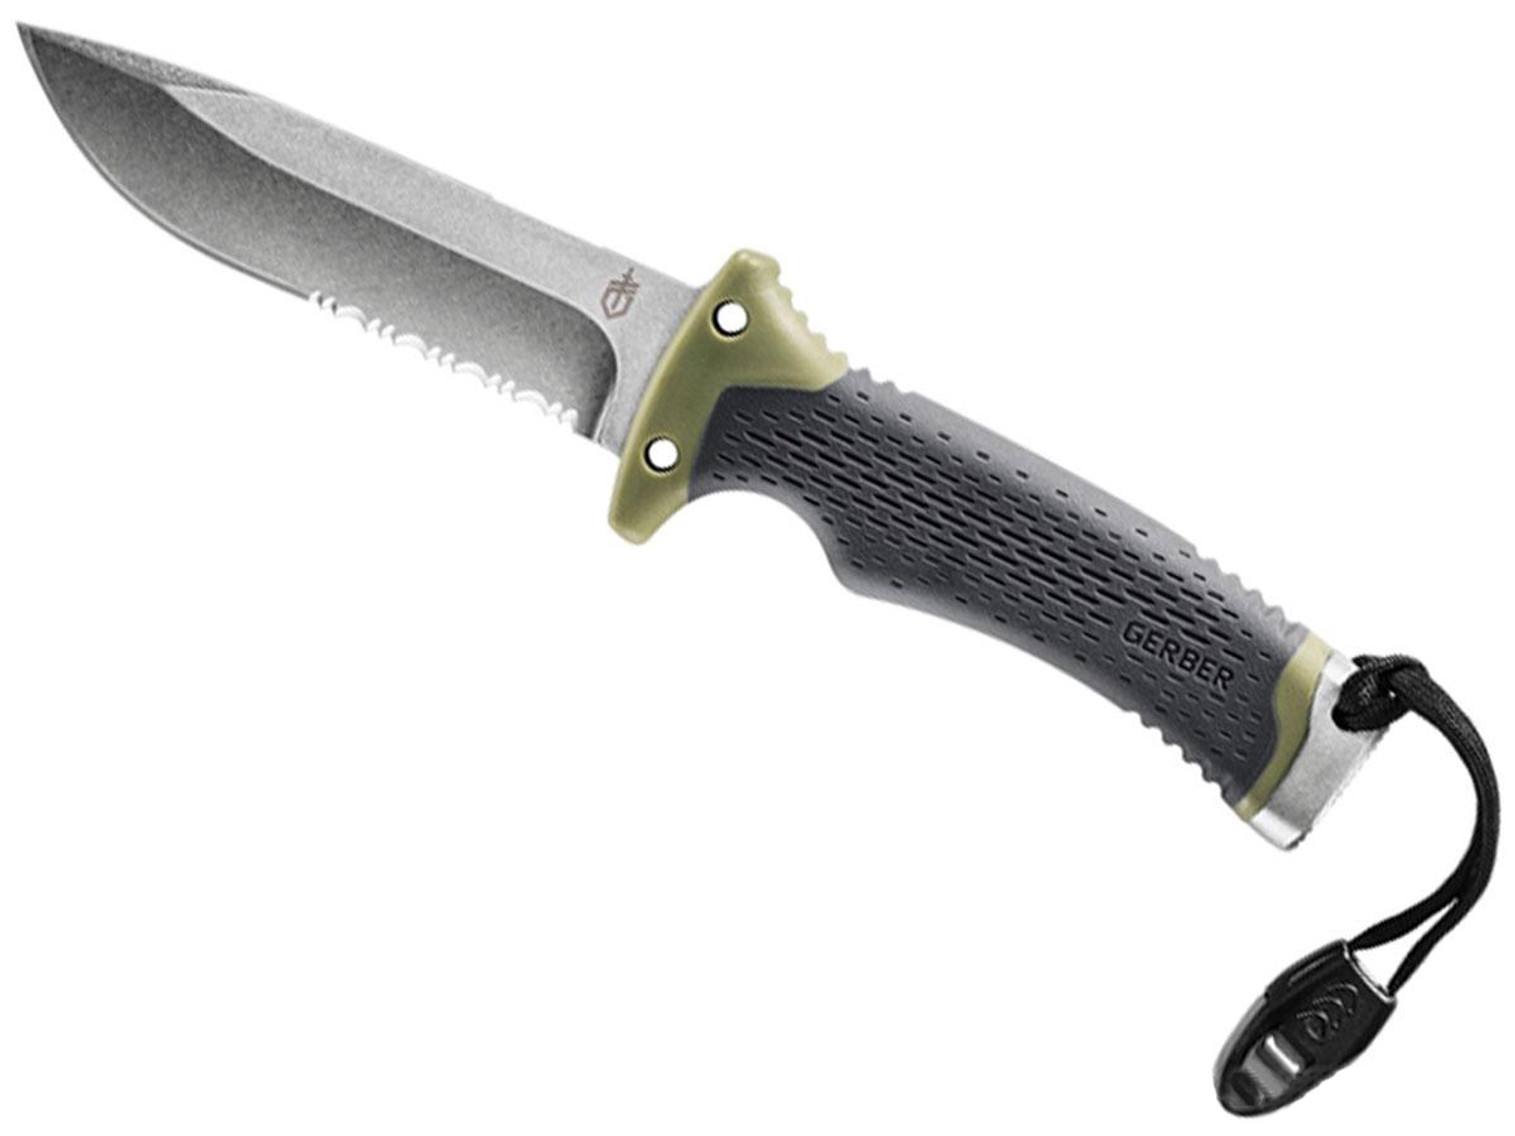 Gerber Ultimate Fixed Blade Survival Knife